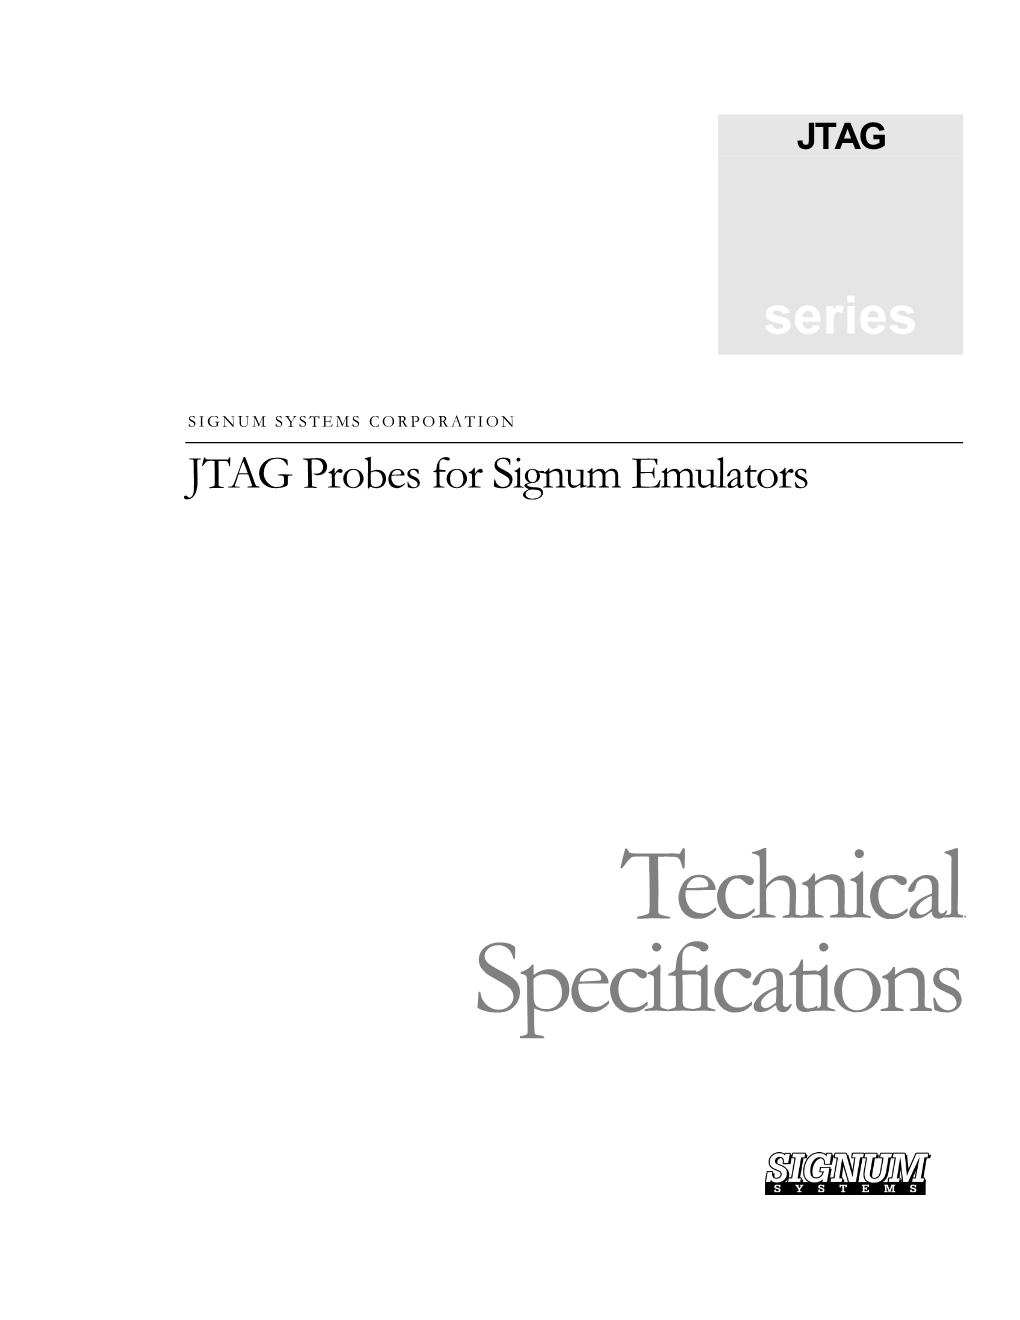 JTAG Probes for Signum Emulators